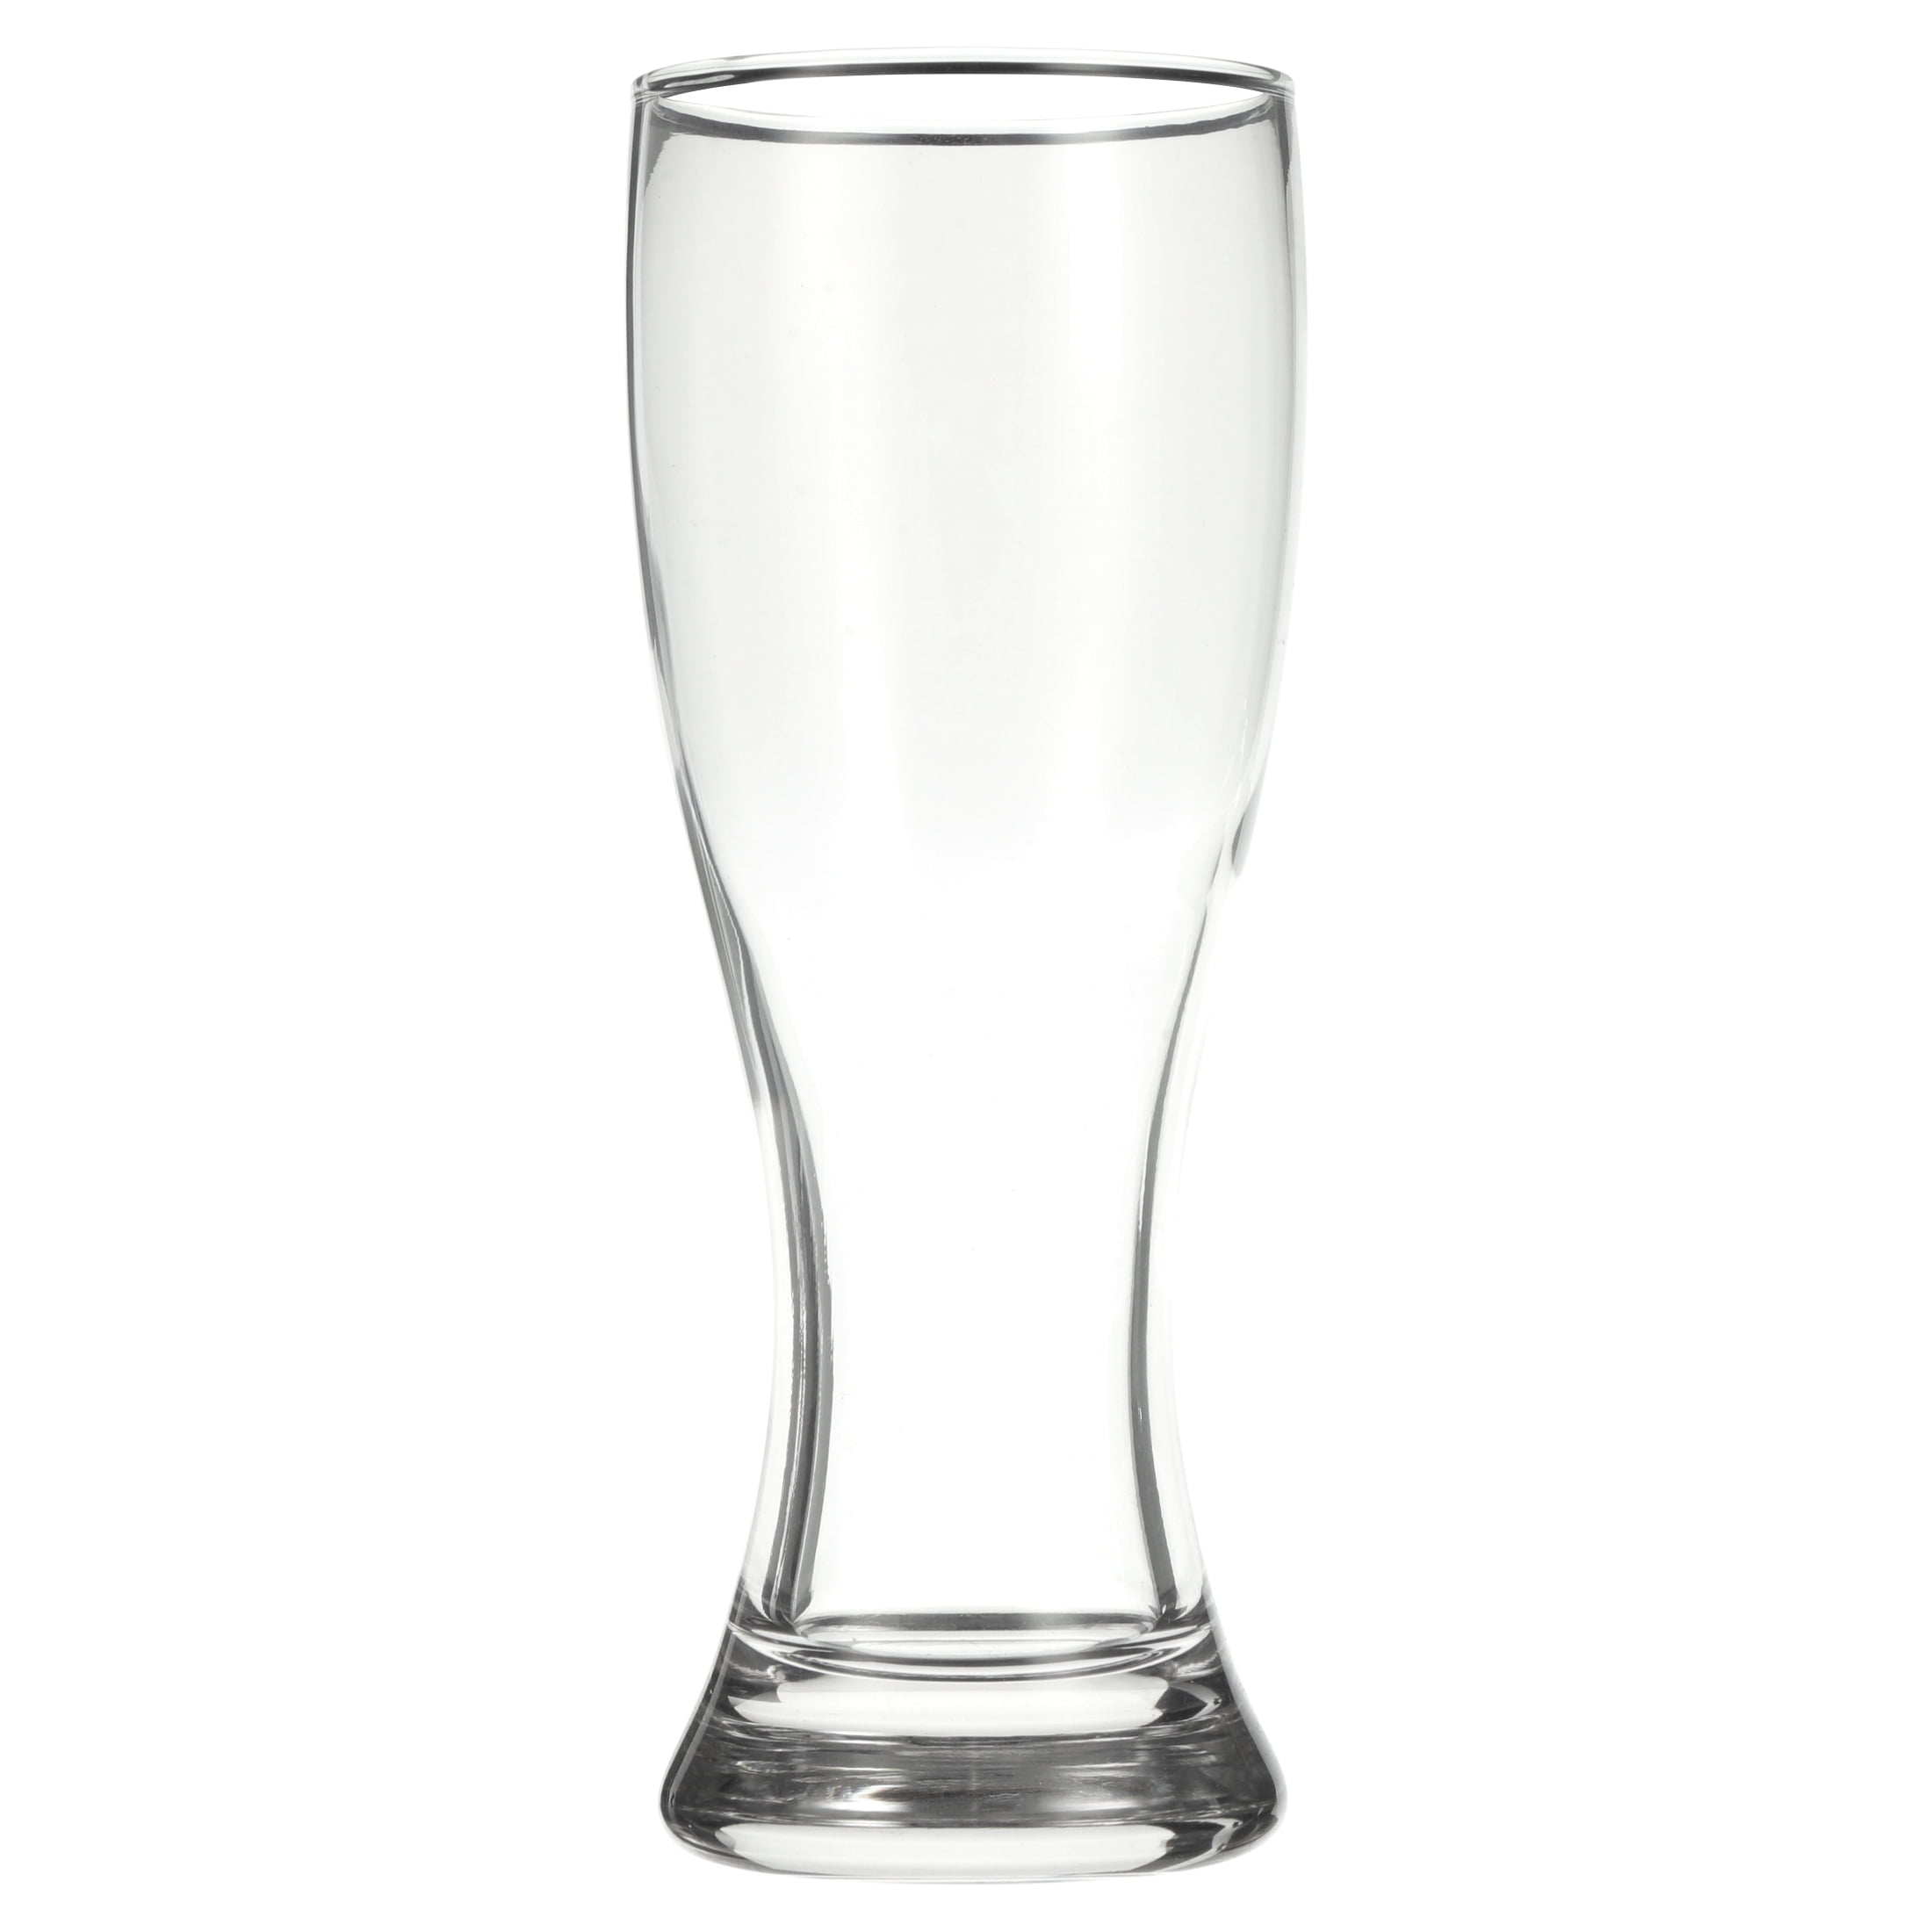 Libbey 4998053, 23.75 Oz Spiegelau American Wheat Beer Glass, DZ